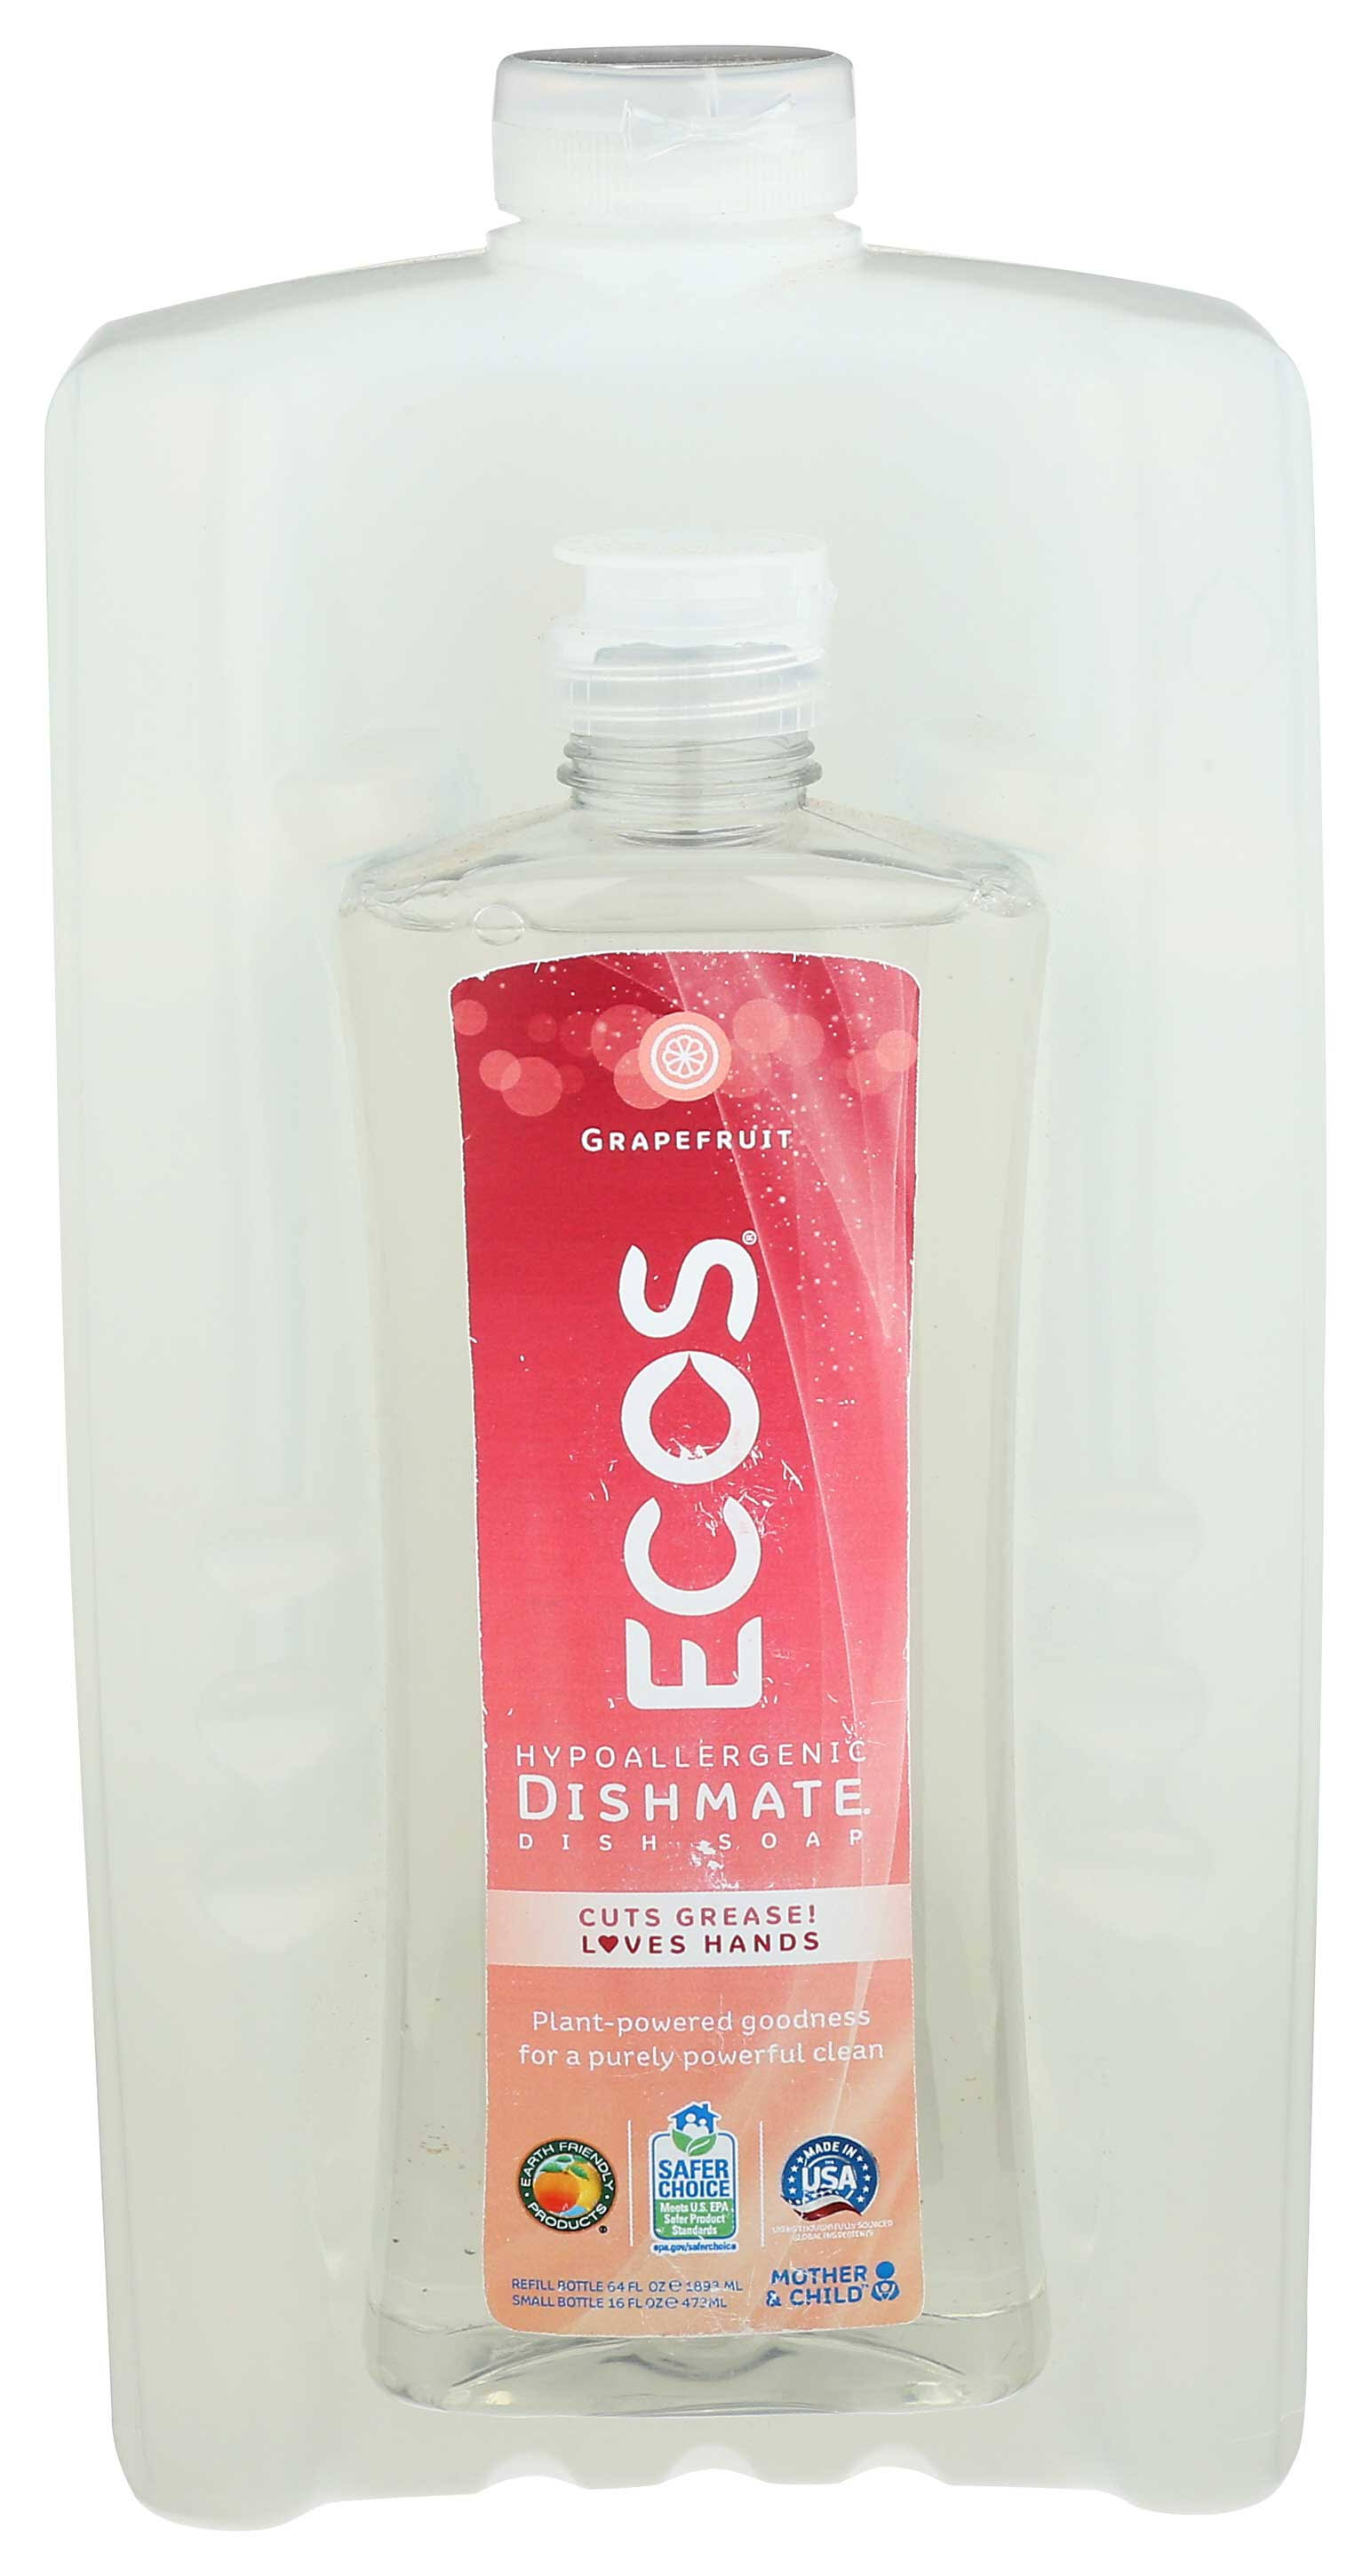 Ecos Dishmate Dish Soap, Grapefruit - 2 bottles, 80 fl oz